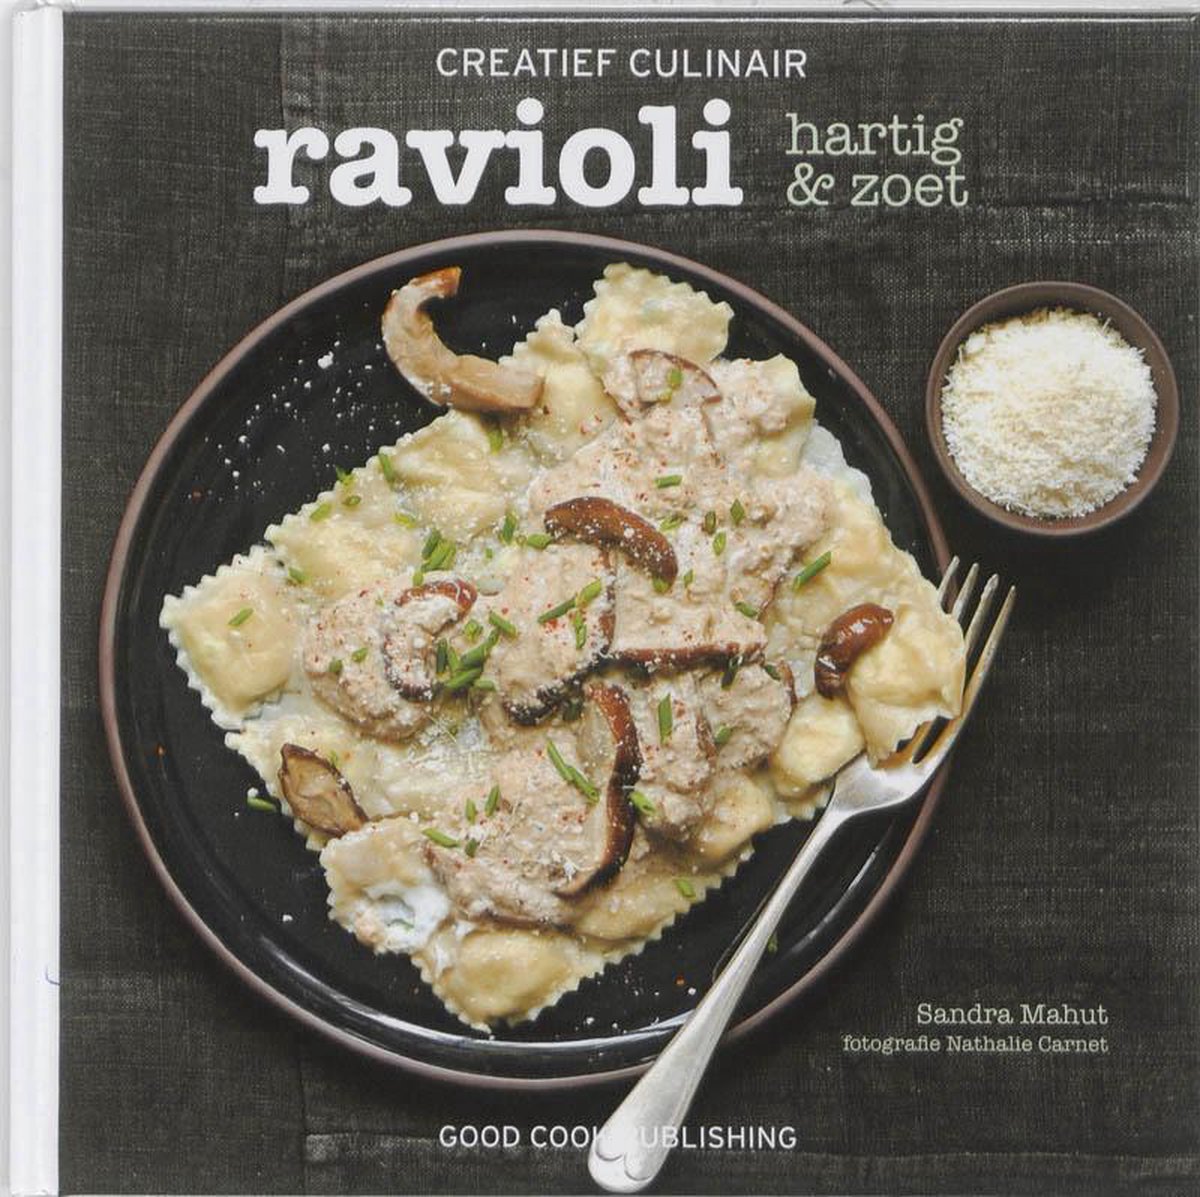 Ravioli hartig & zoet / Creatief Culinair